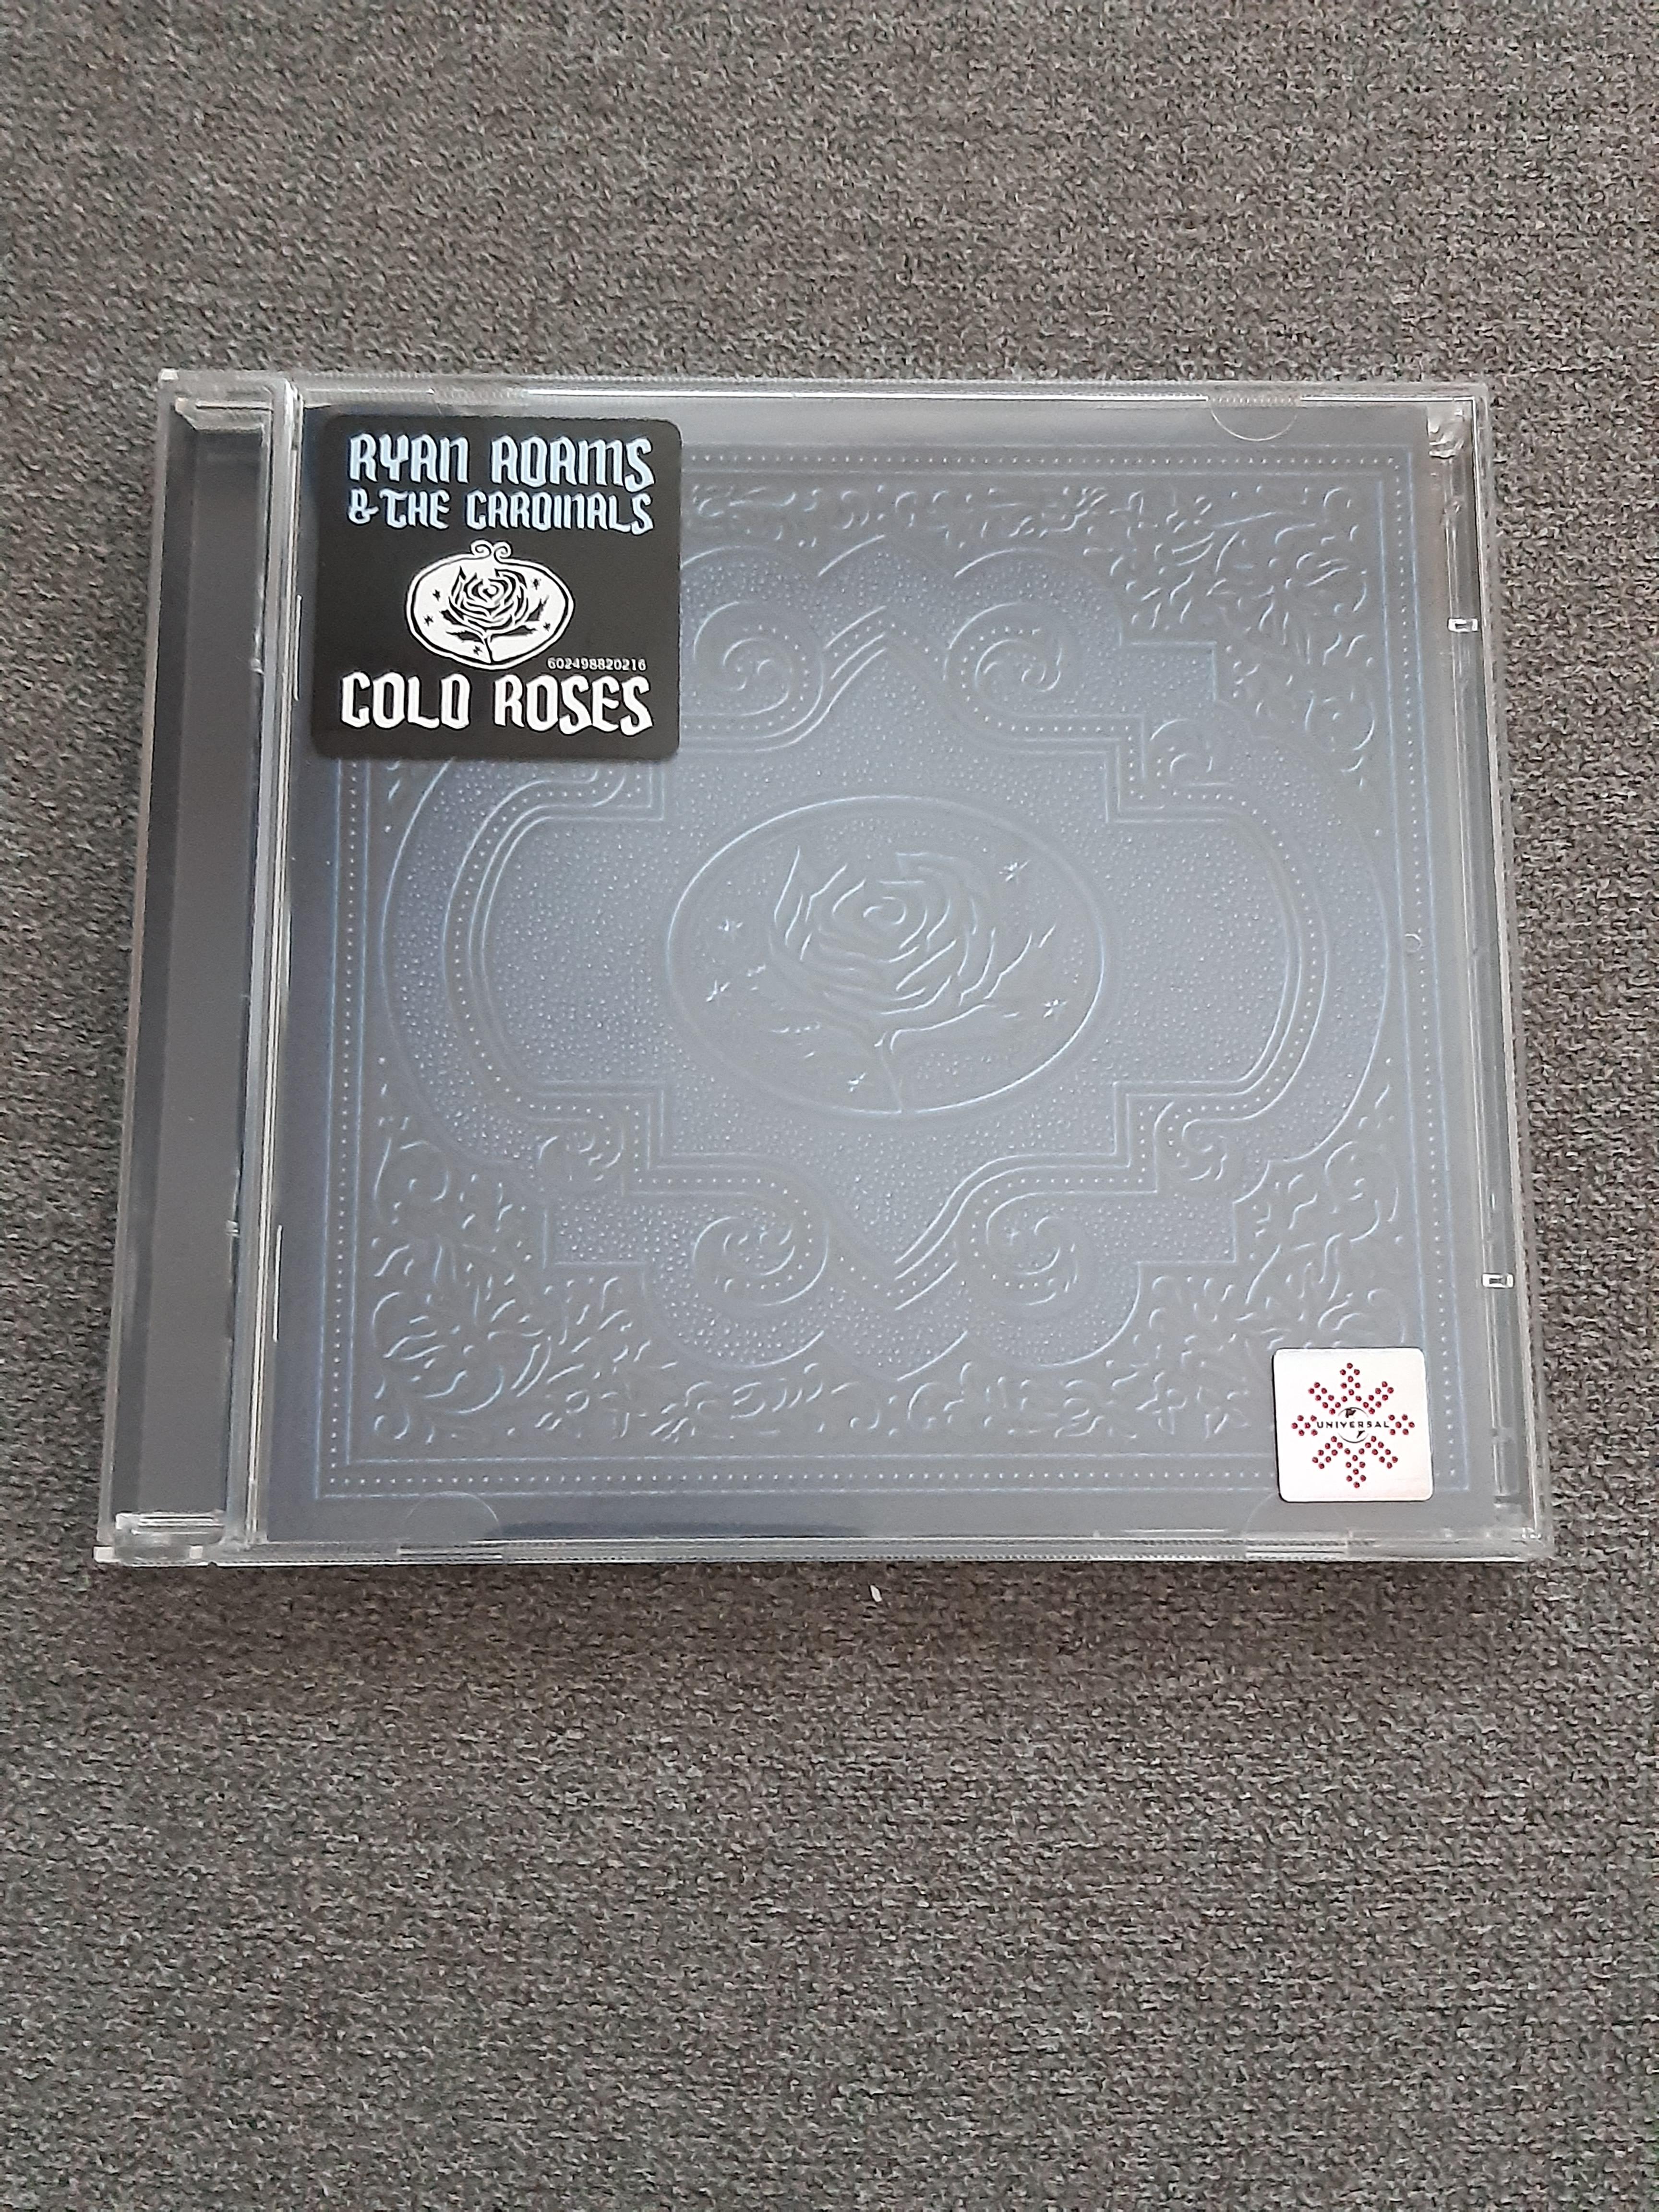 Ryan Adams & The Cardinals - Cold Roses - 2 CD (käytetty)